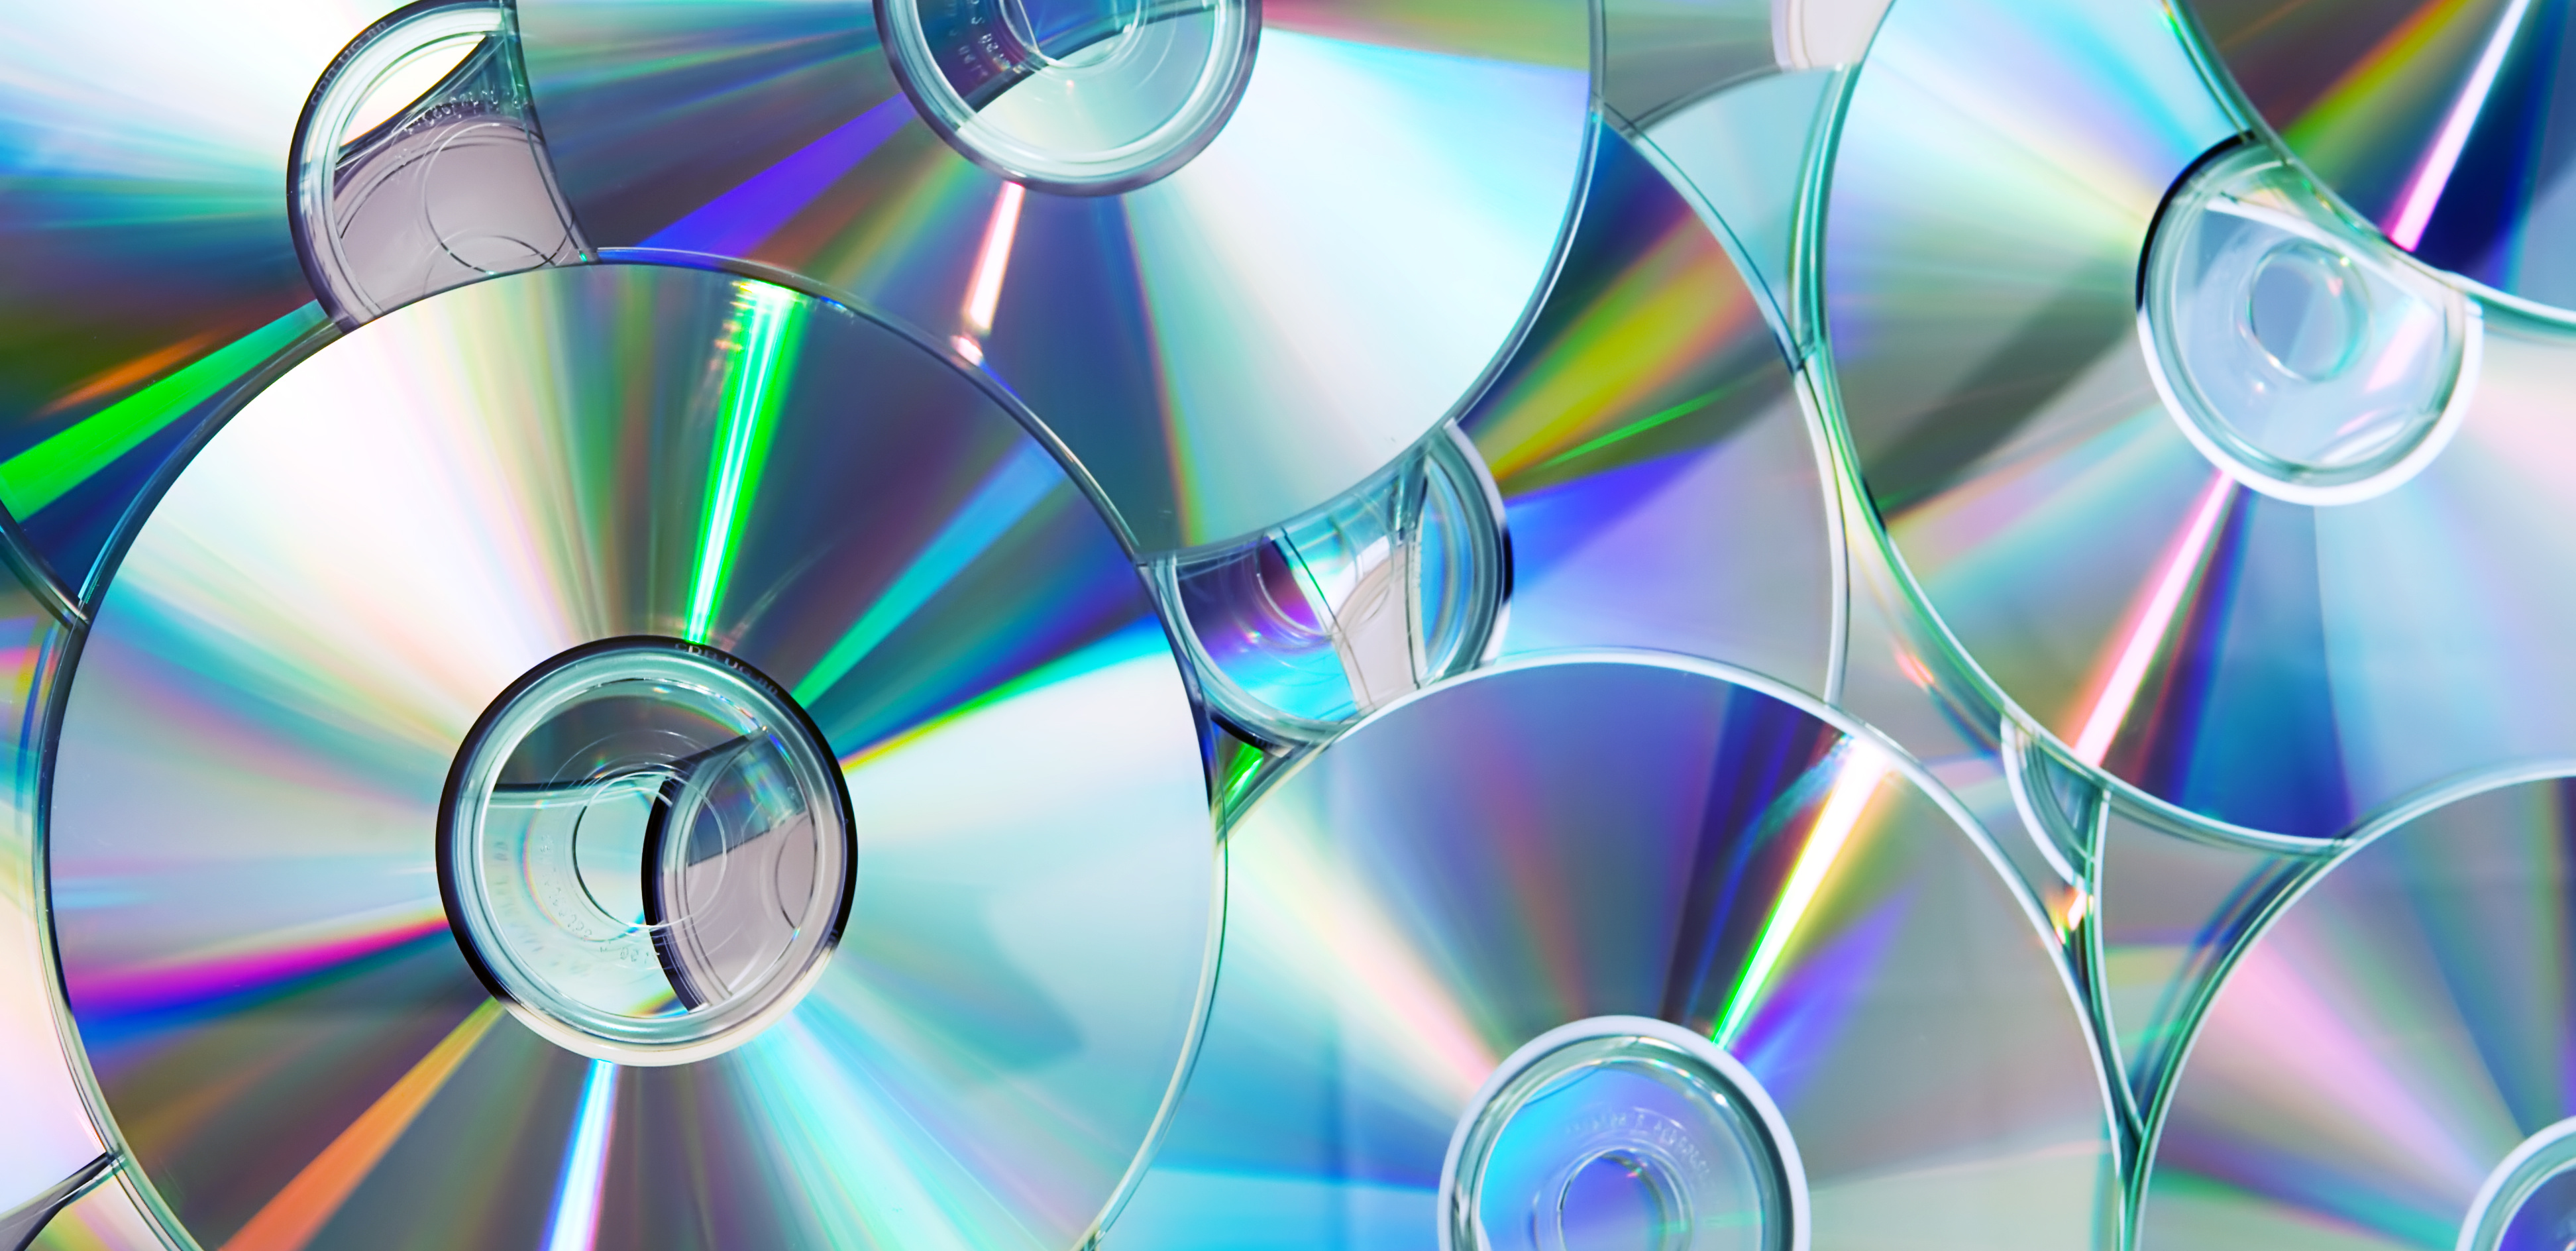 duplicated discs